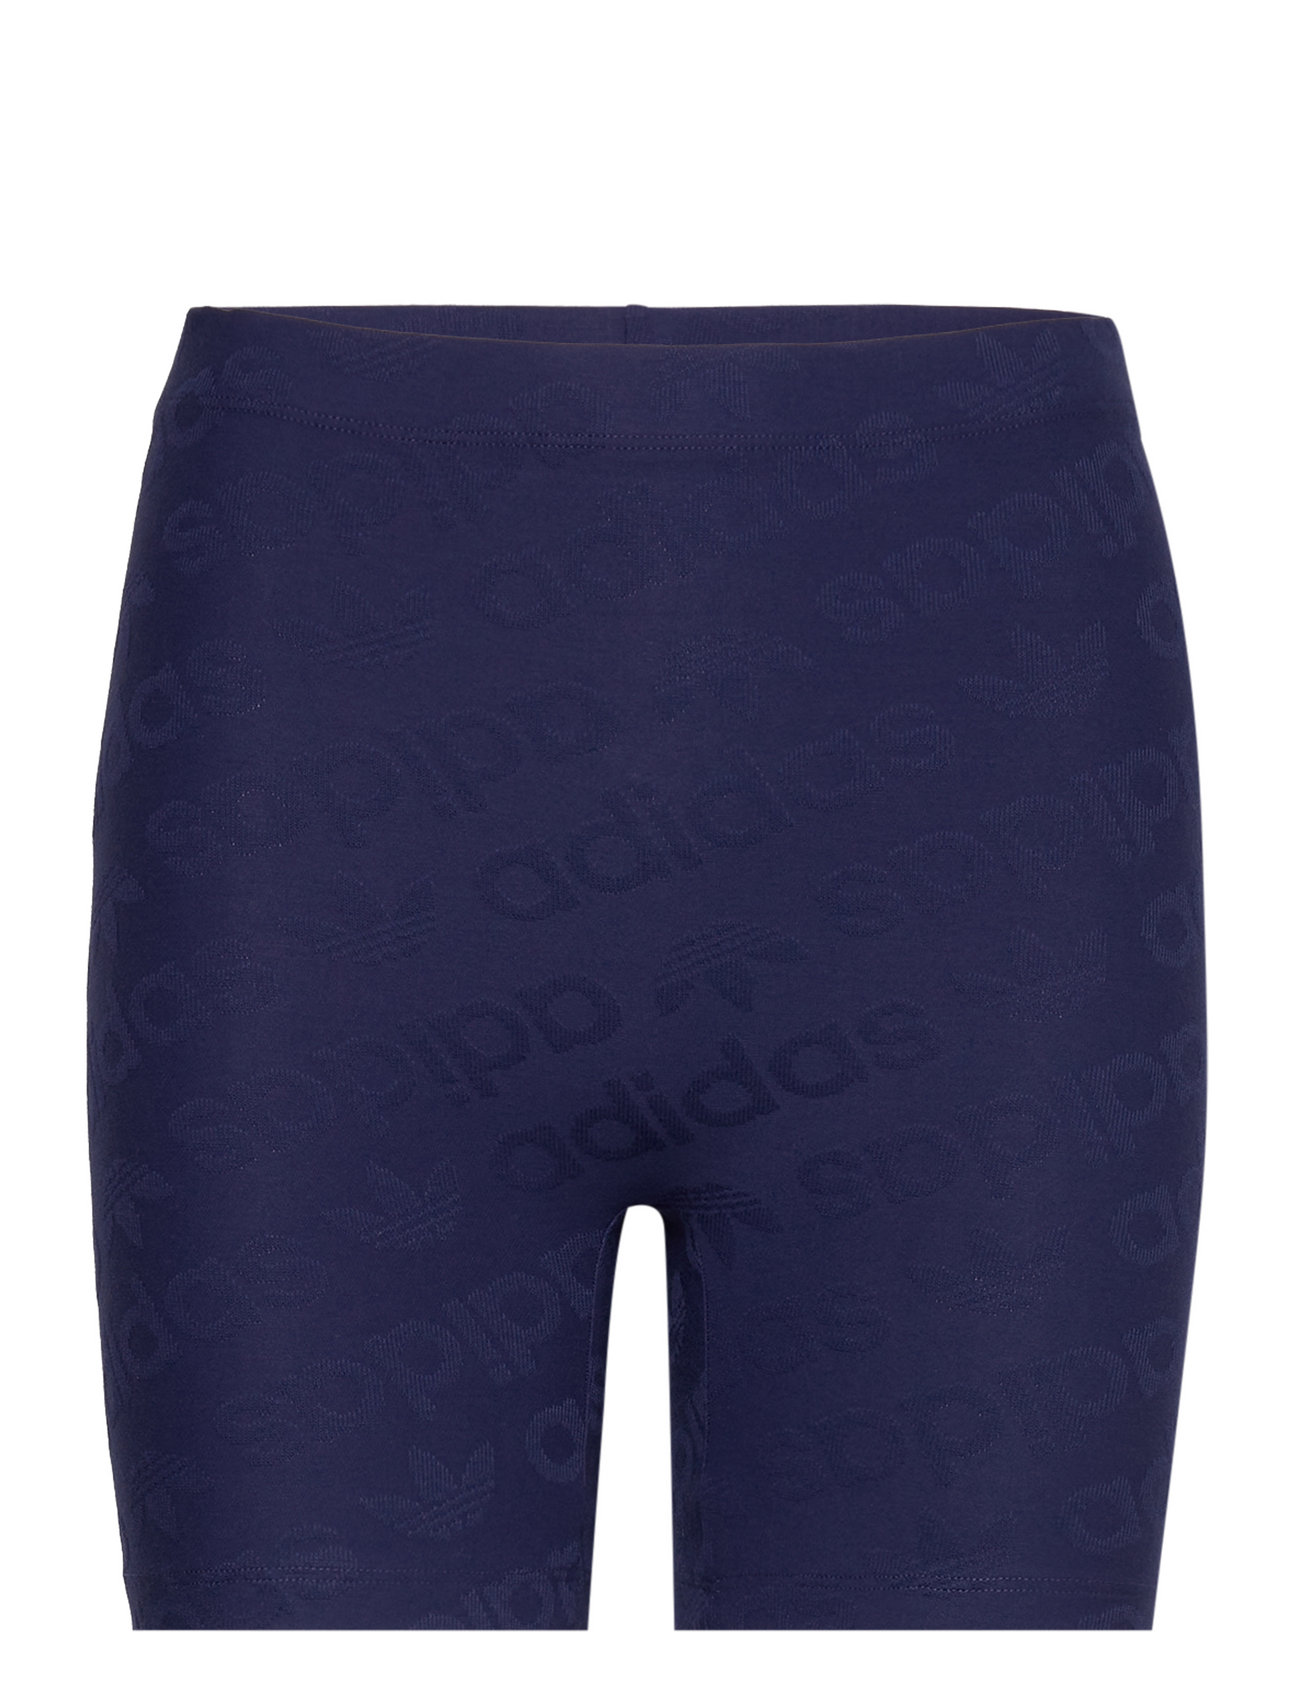 adidas Originals Underwear Short – shorts – shop at Booztlet